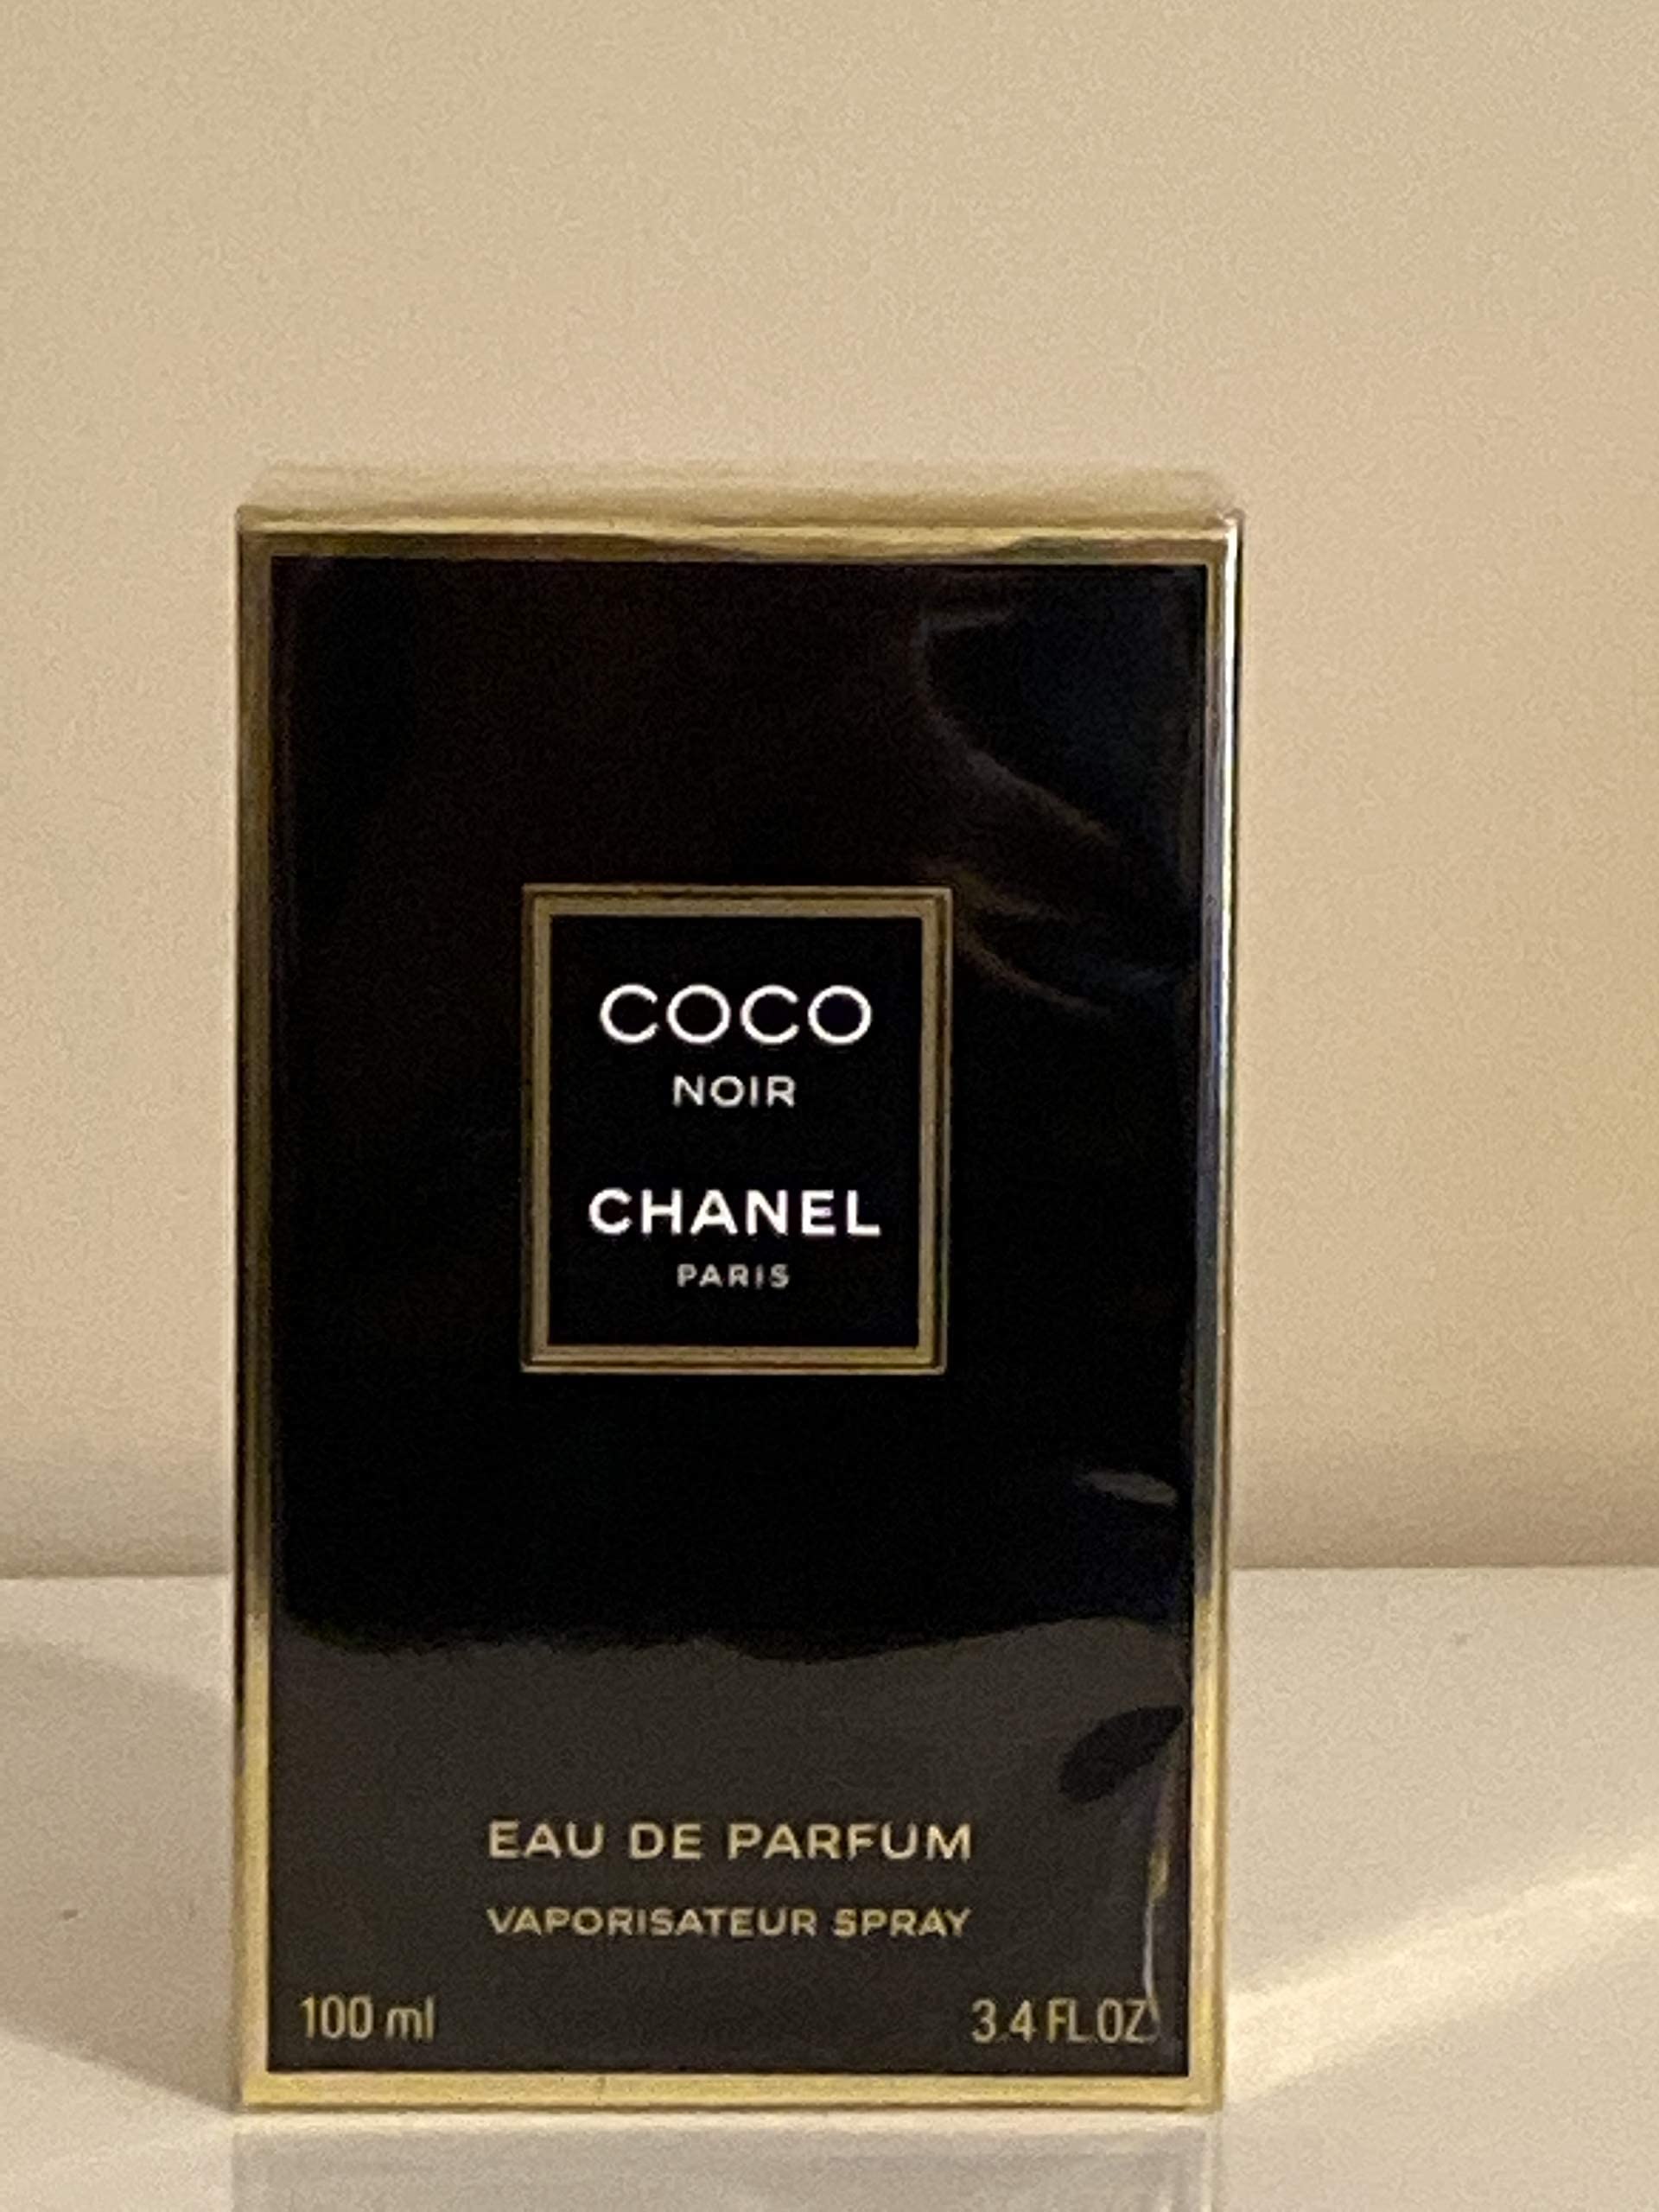 Nước hoa nữ Chanel CoCo Noir Paris EDP 100ml  Wowmart VN  100 hàng ngoại  nhập